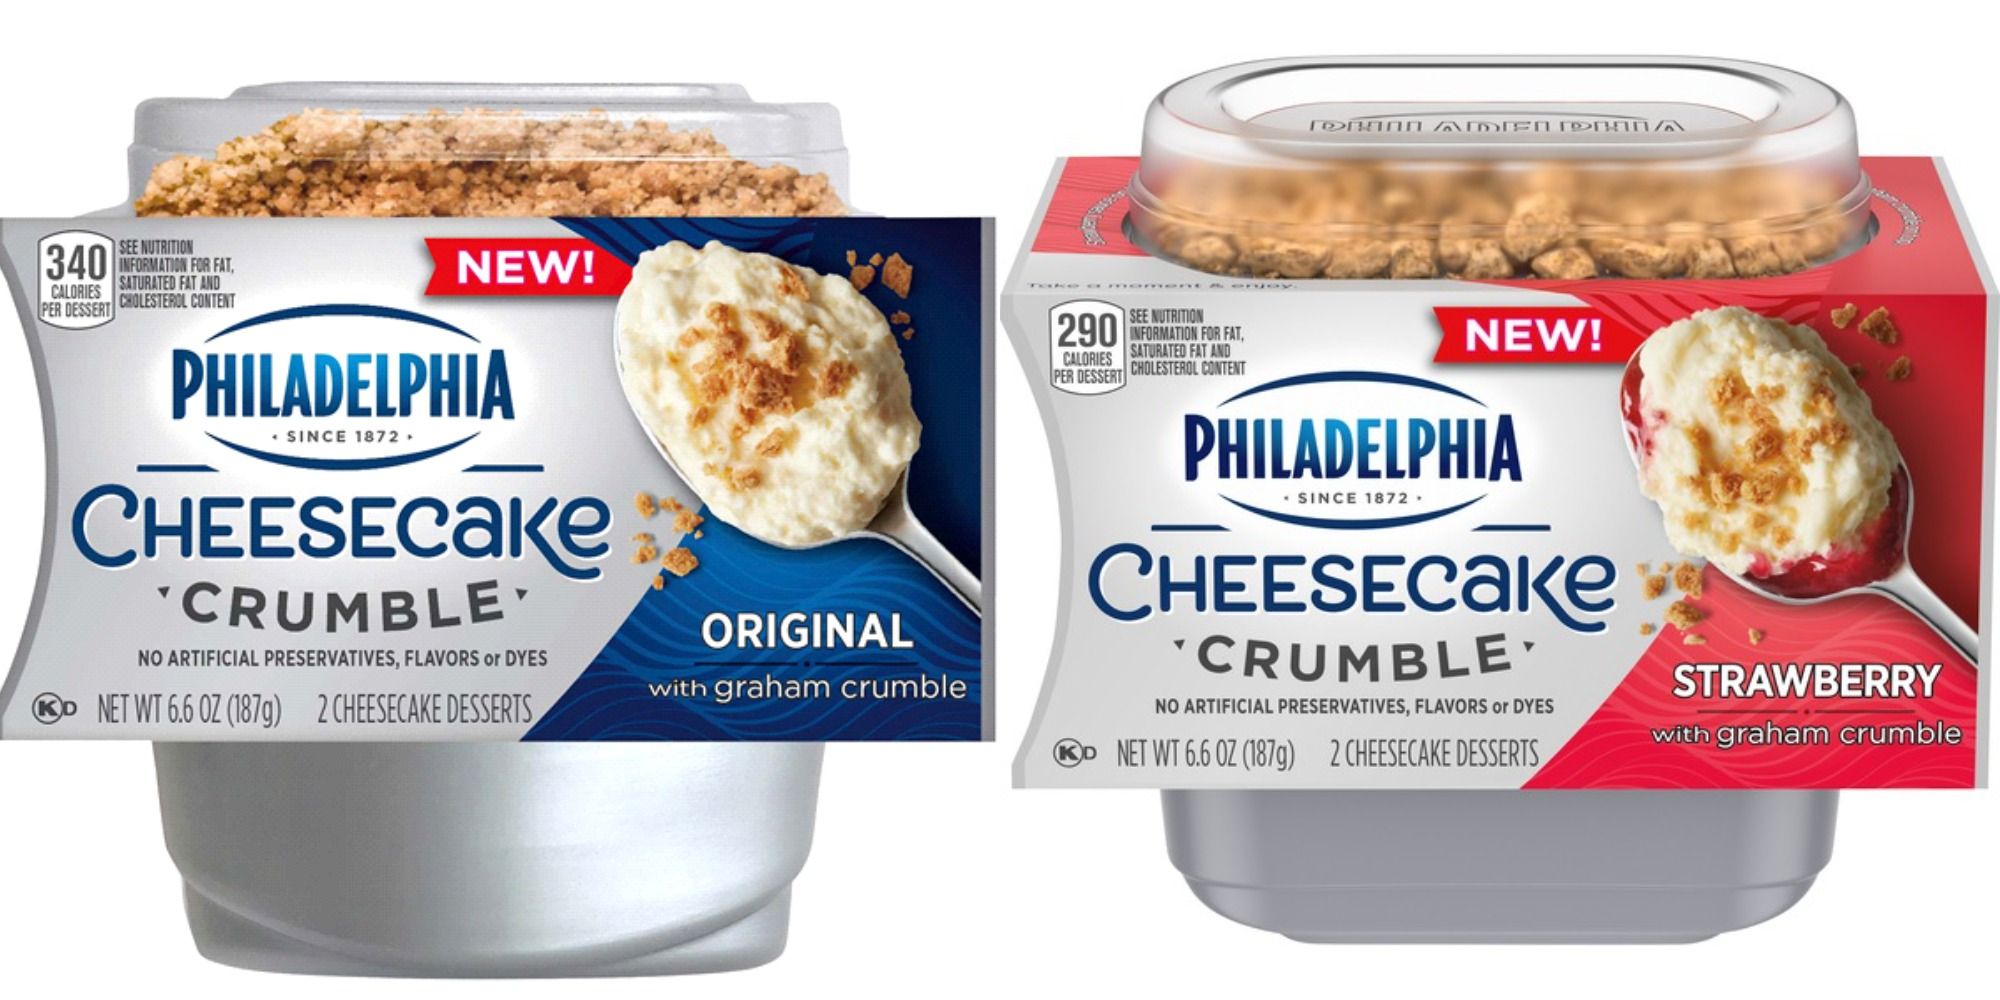 Phildelphia cream cheese interracial commerical